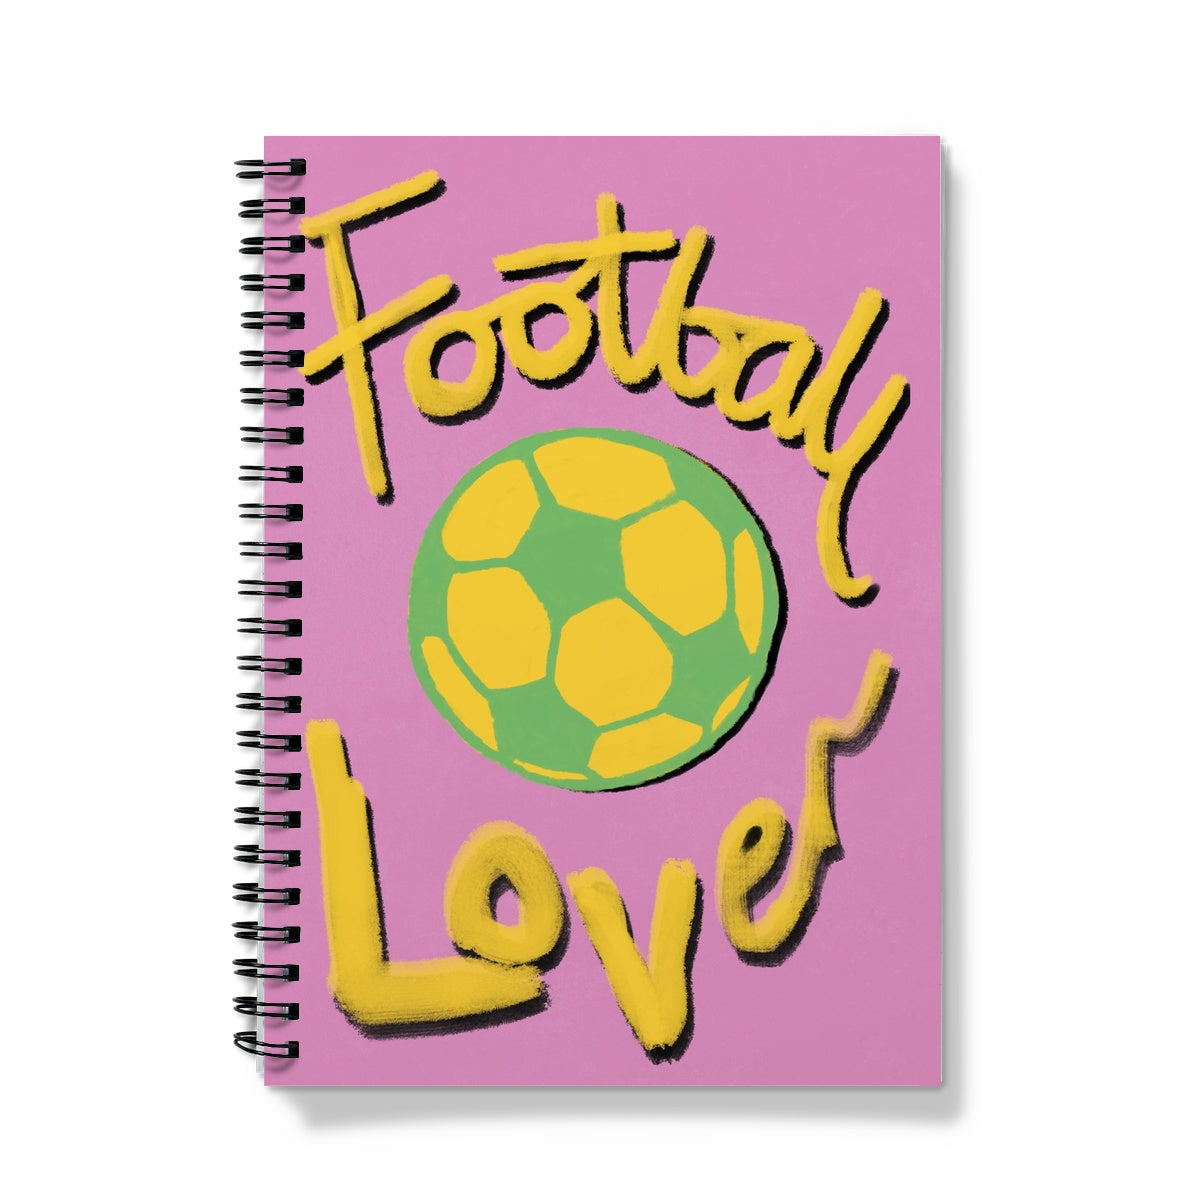 Football Lover Print - Pink, Yellow, Green Notebook